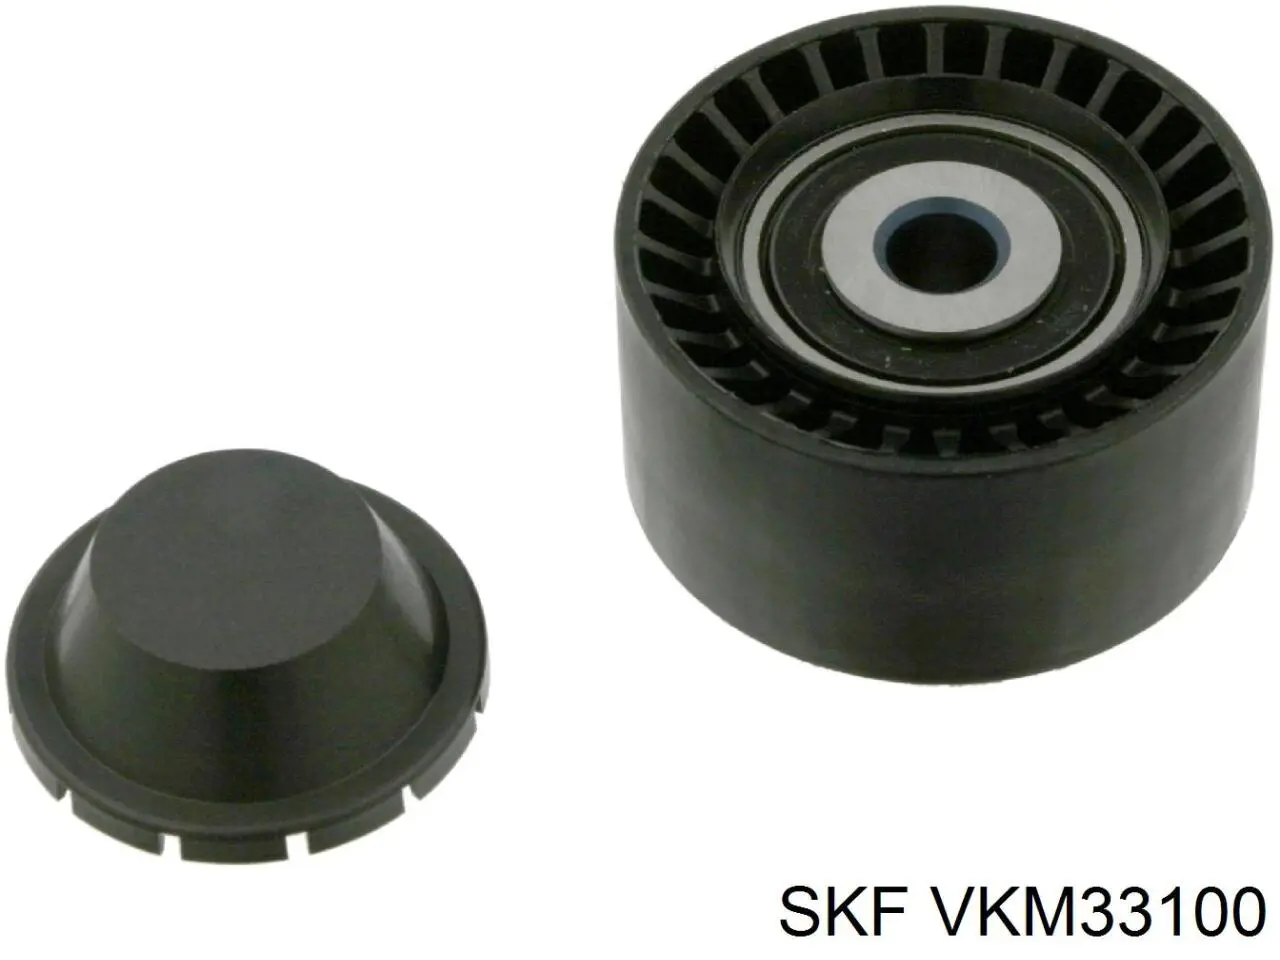 VKM33100 SKF polea inversión / guía, correa poli v